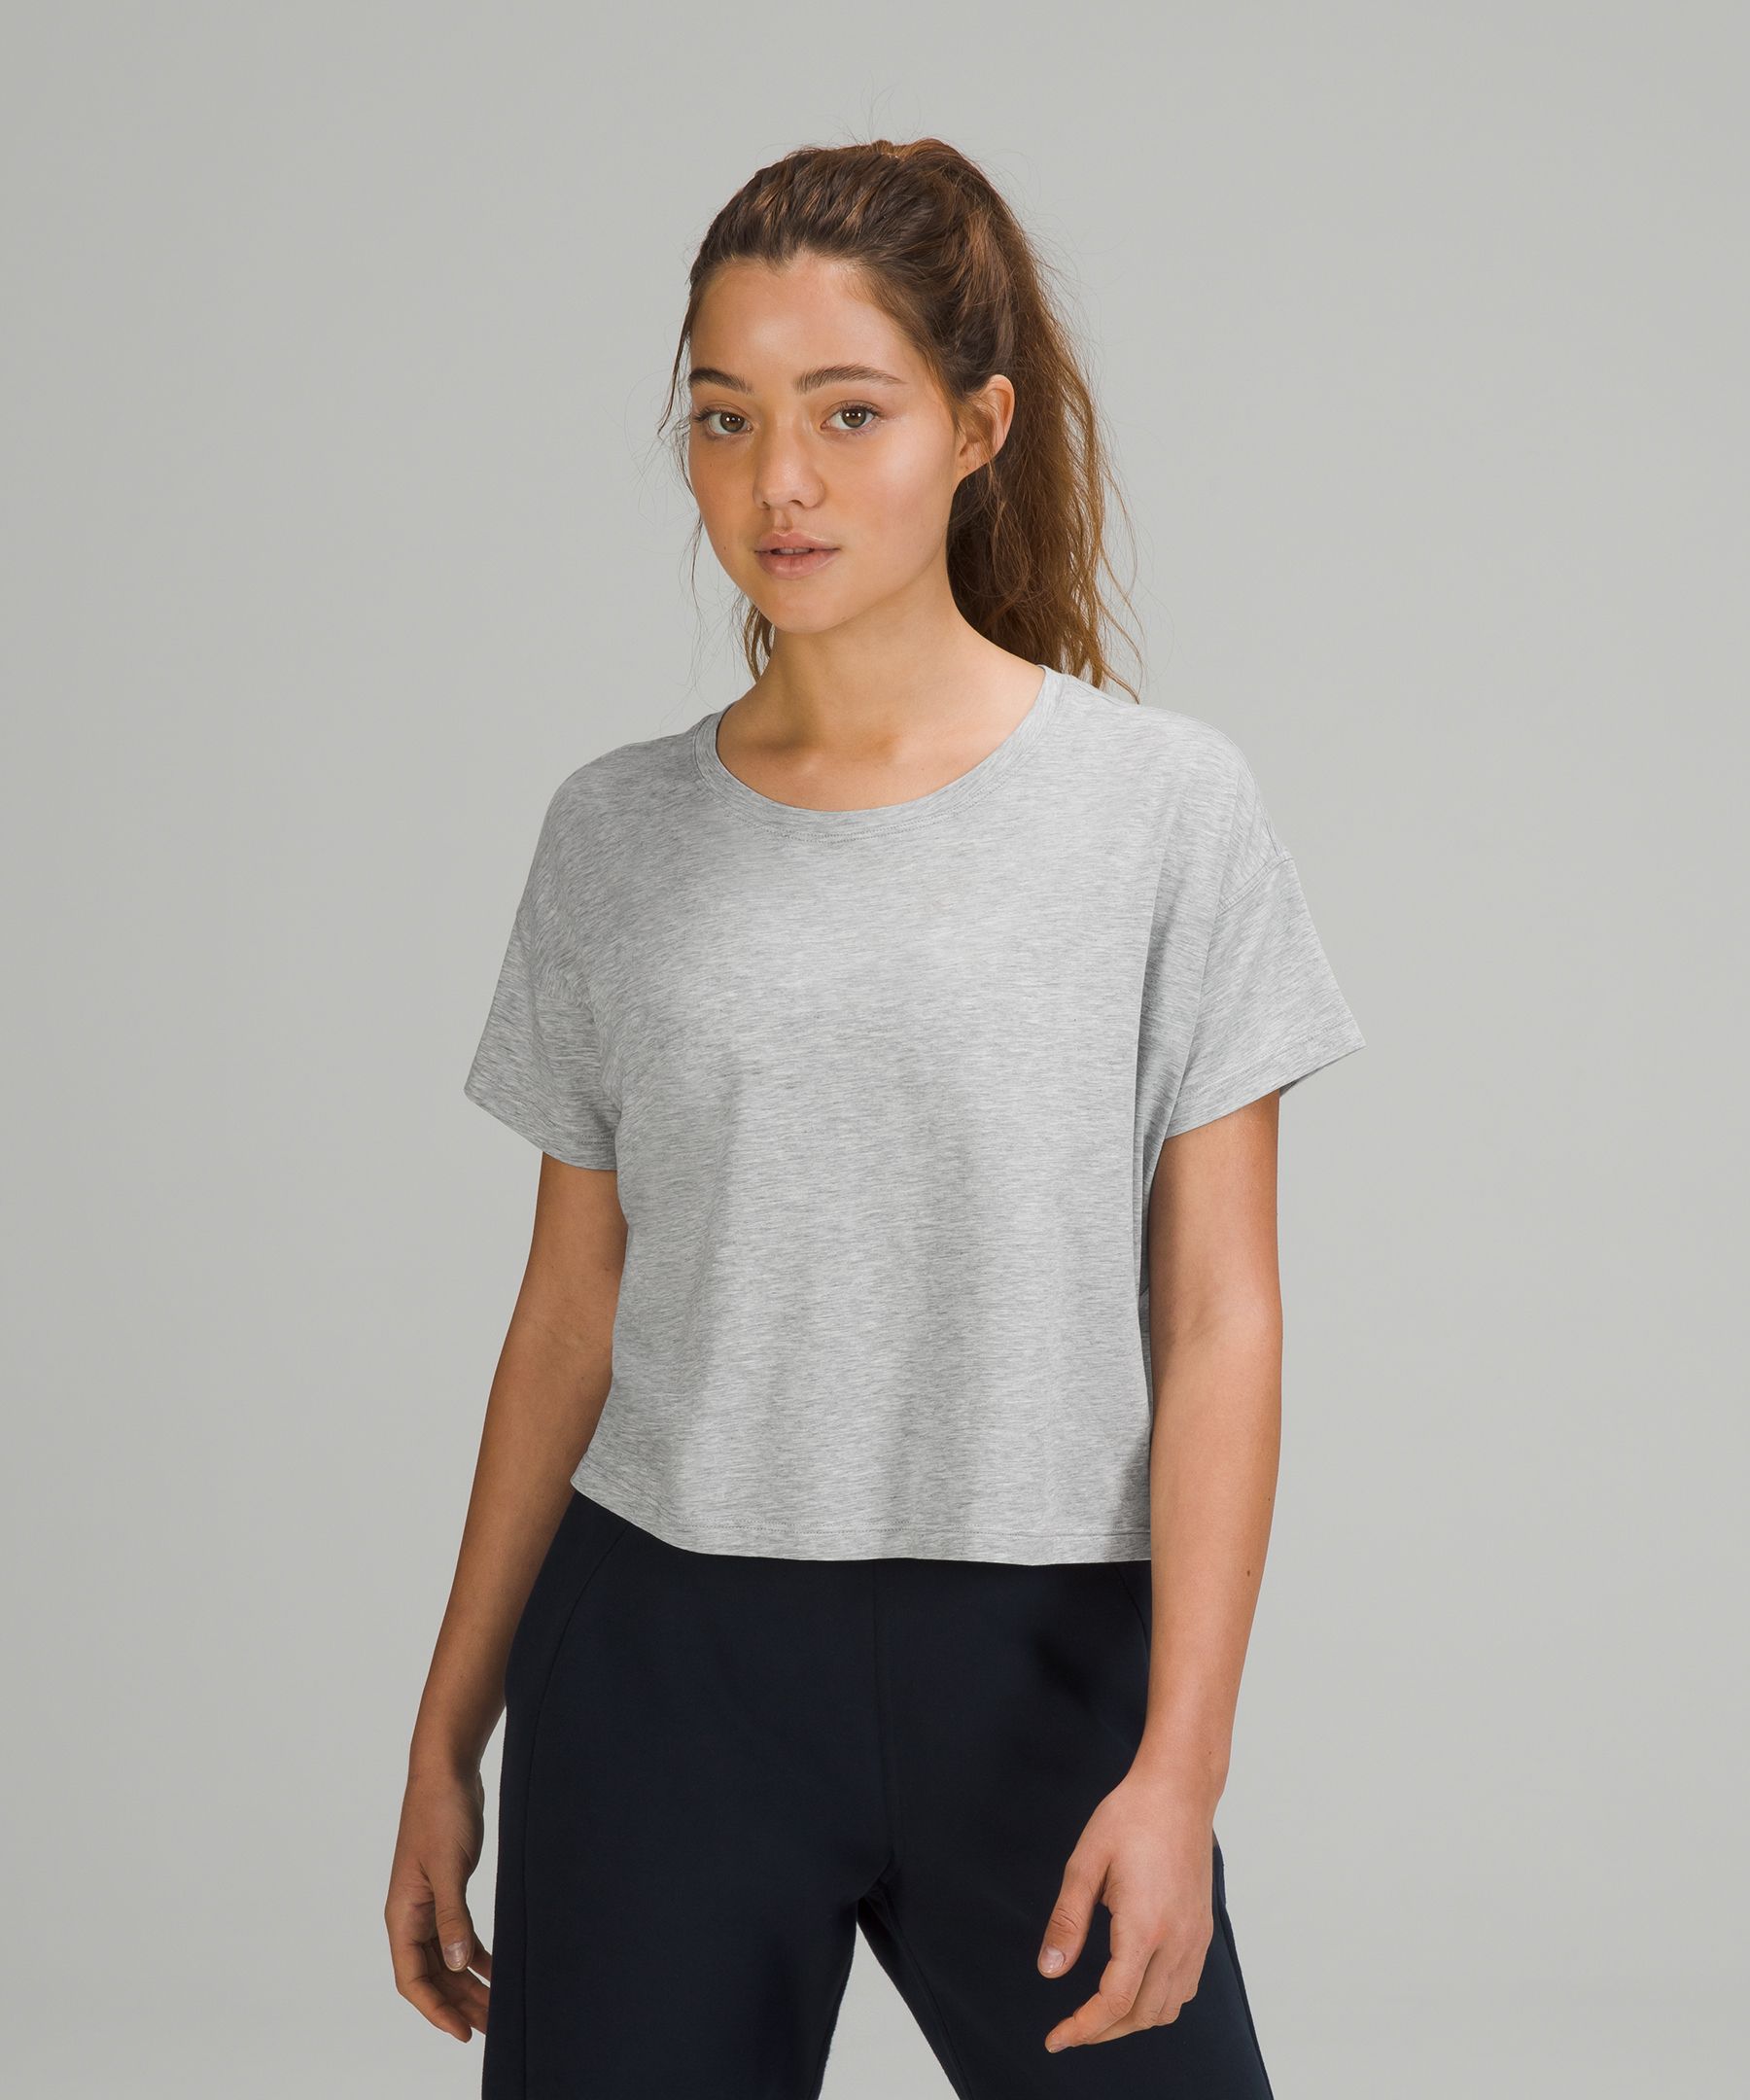 Cates T-Shirt | Women's Short Sleeve Shirts & Tee's | lululemon